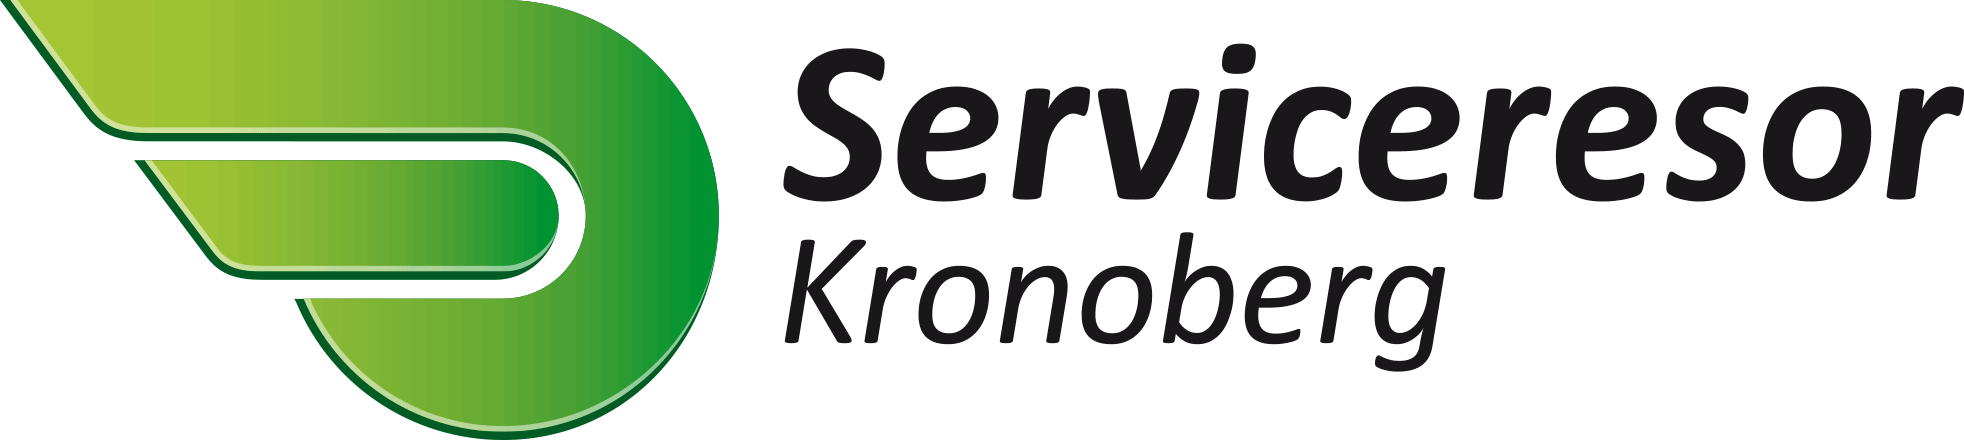 Serviceresor Kronoberg